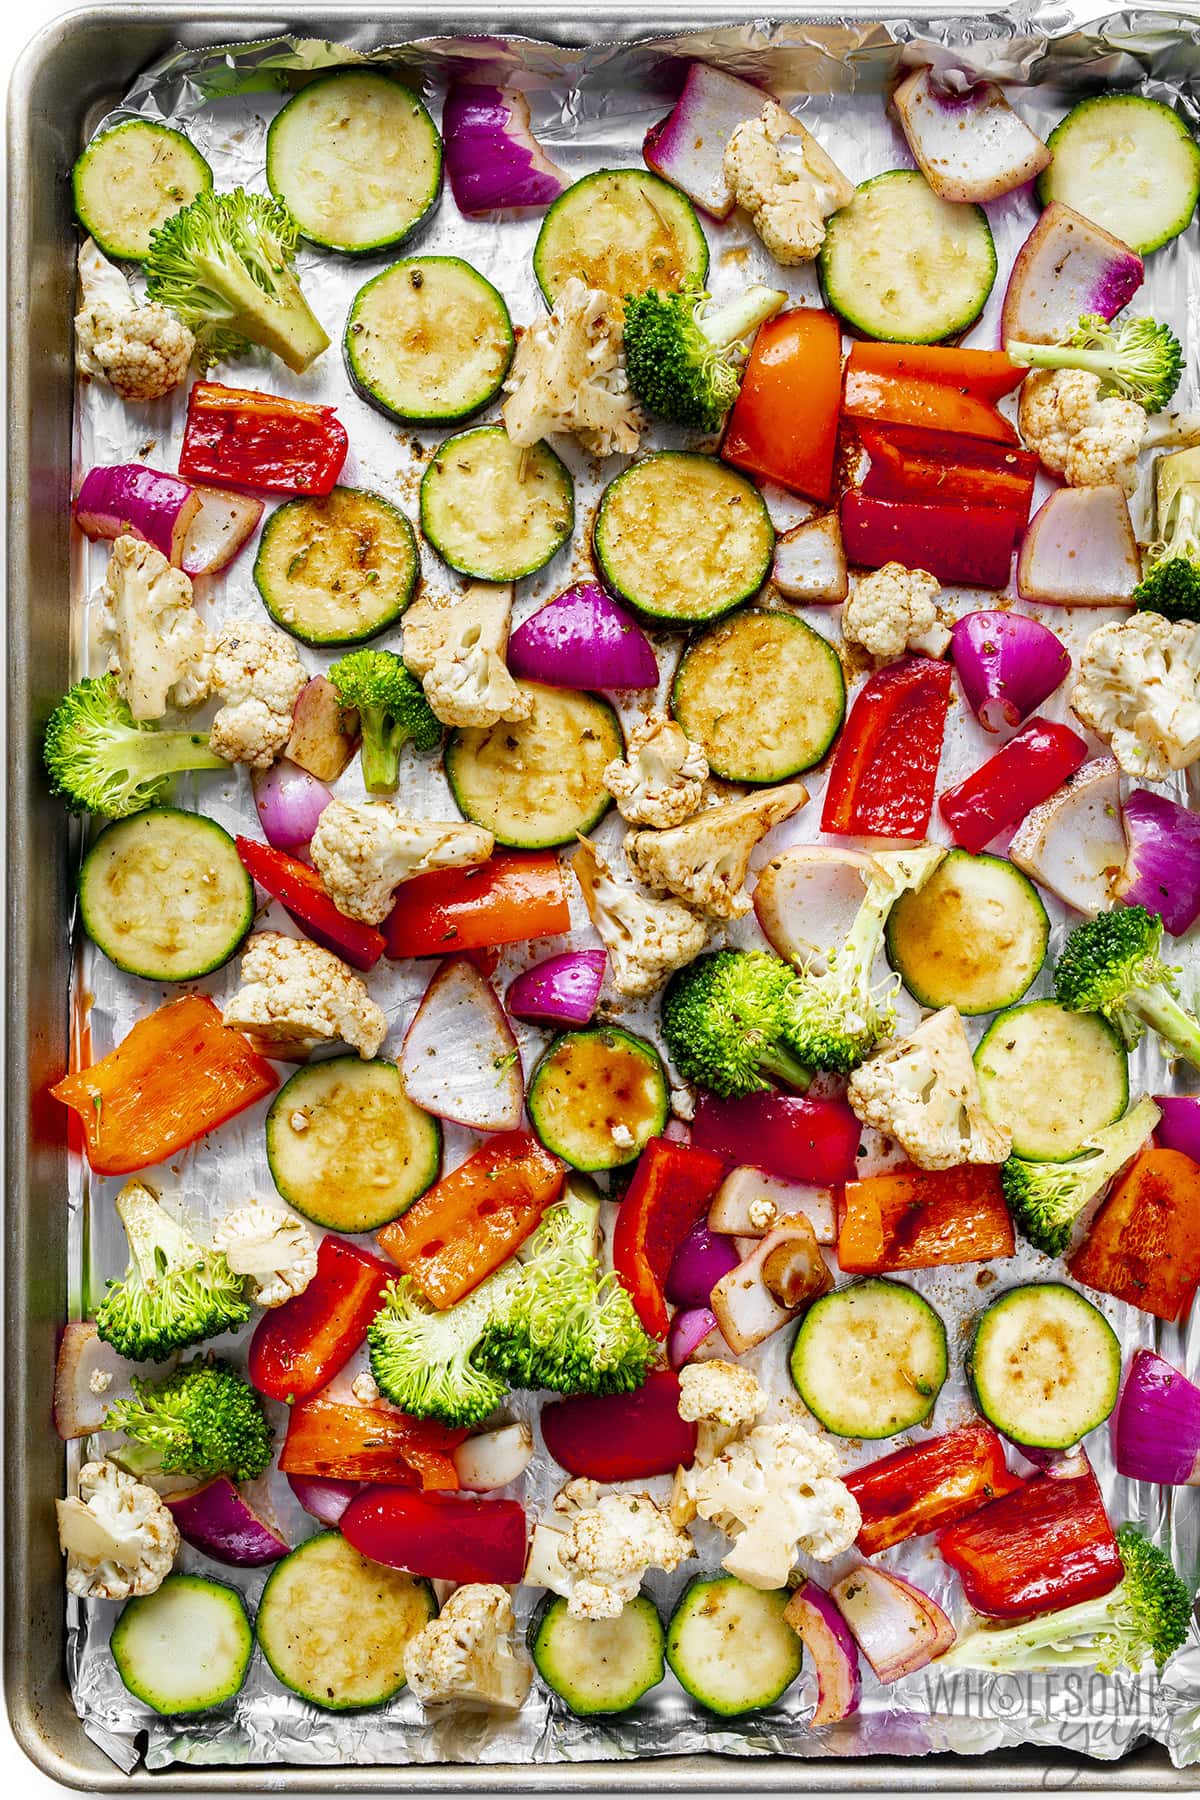 Seasoned veggies on a sheet pan.